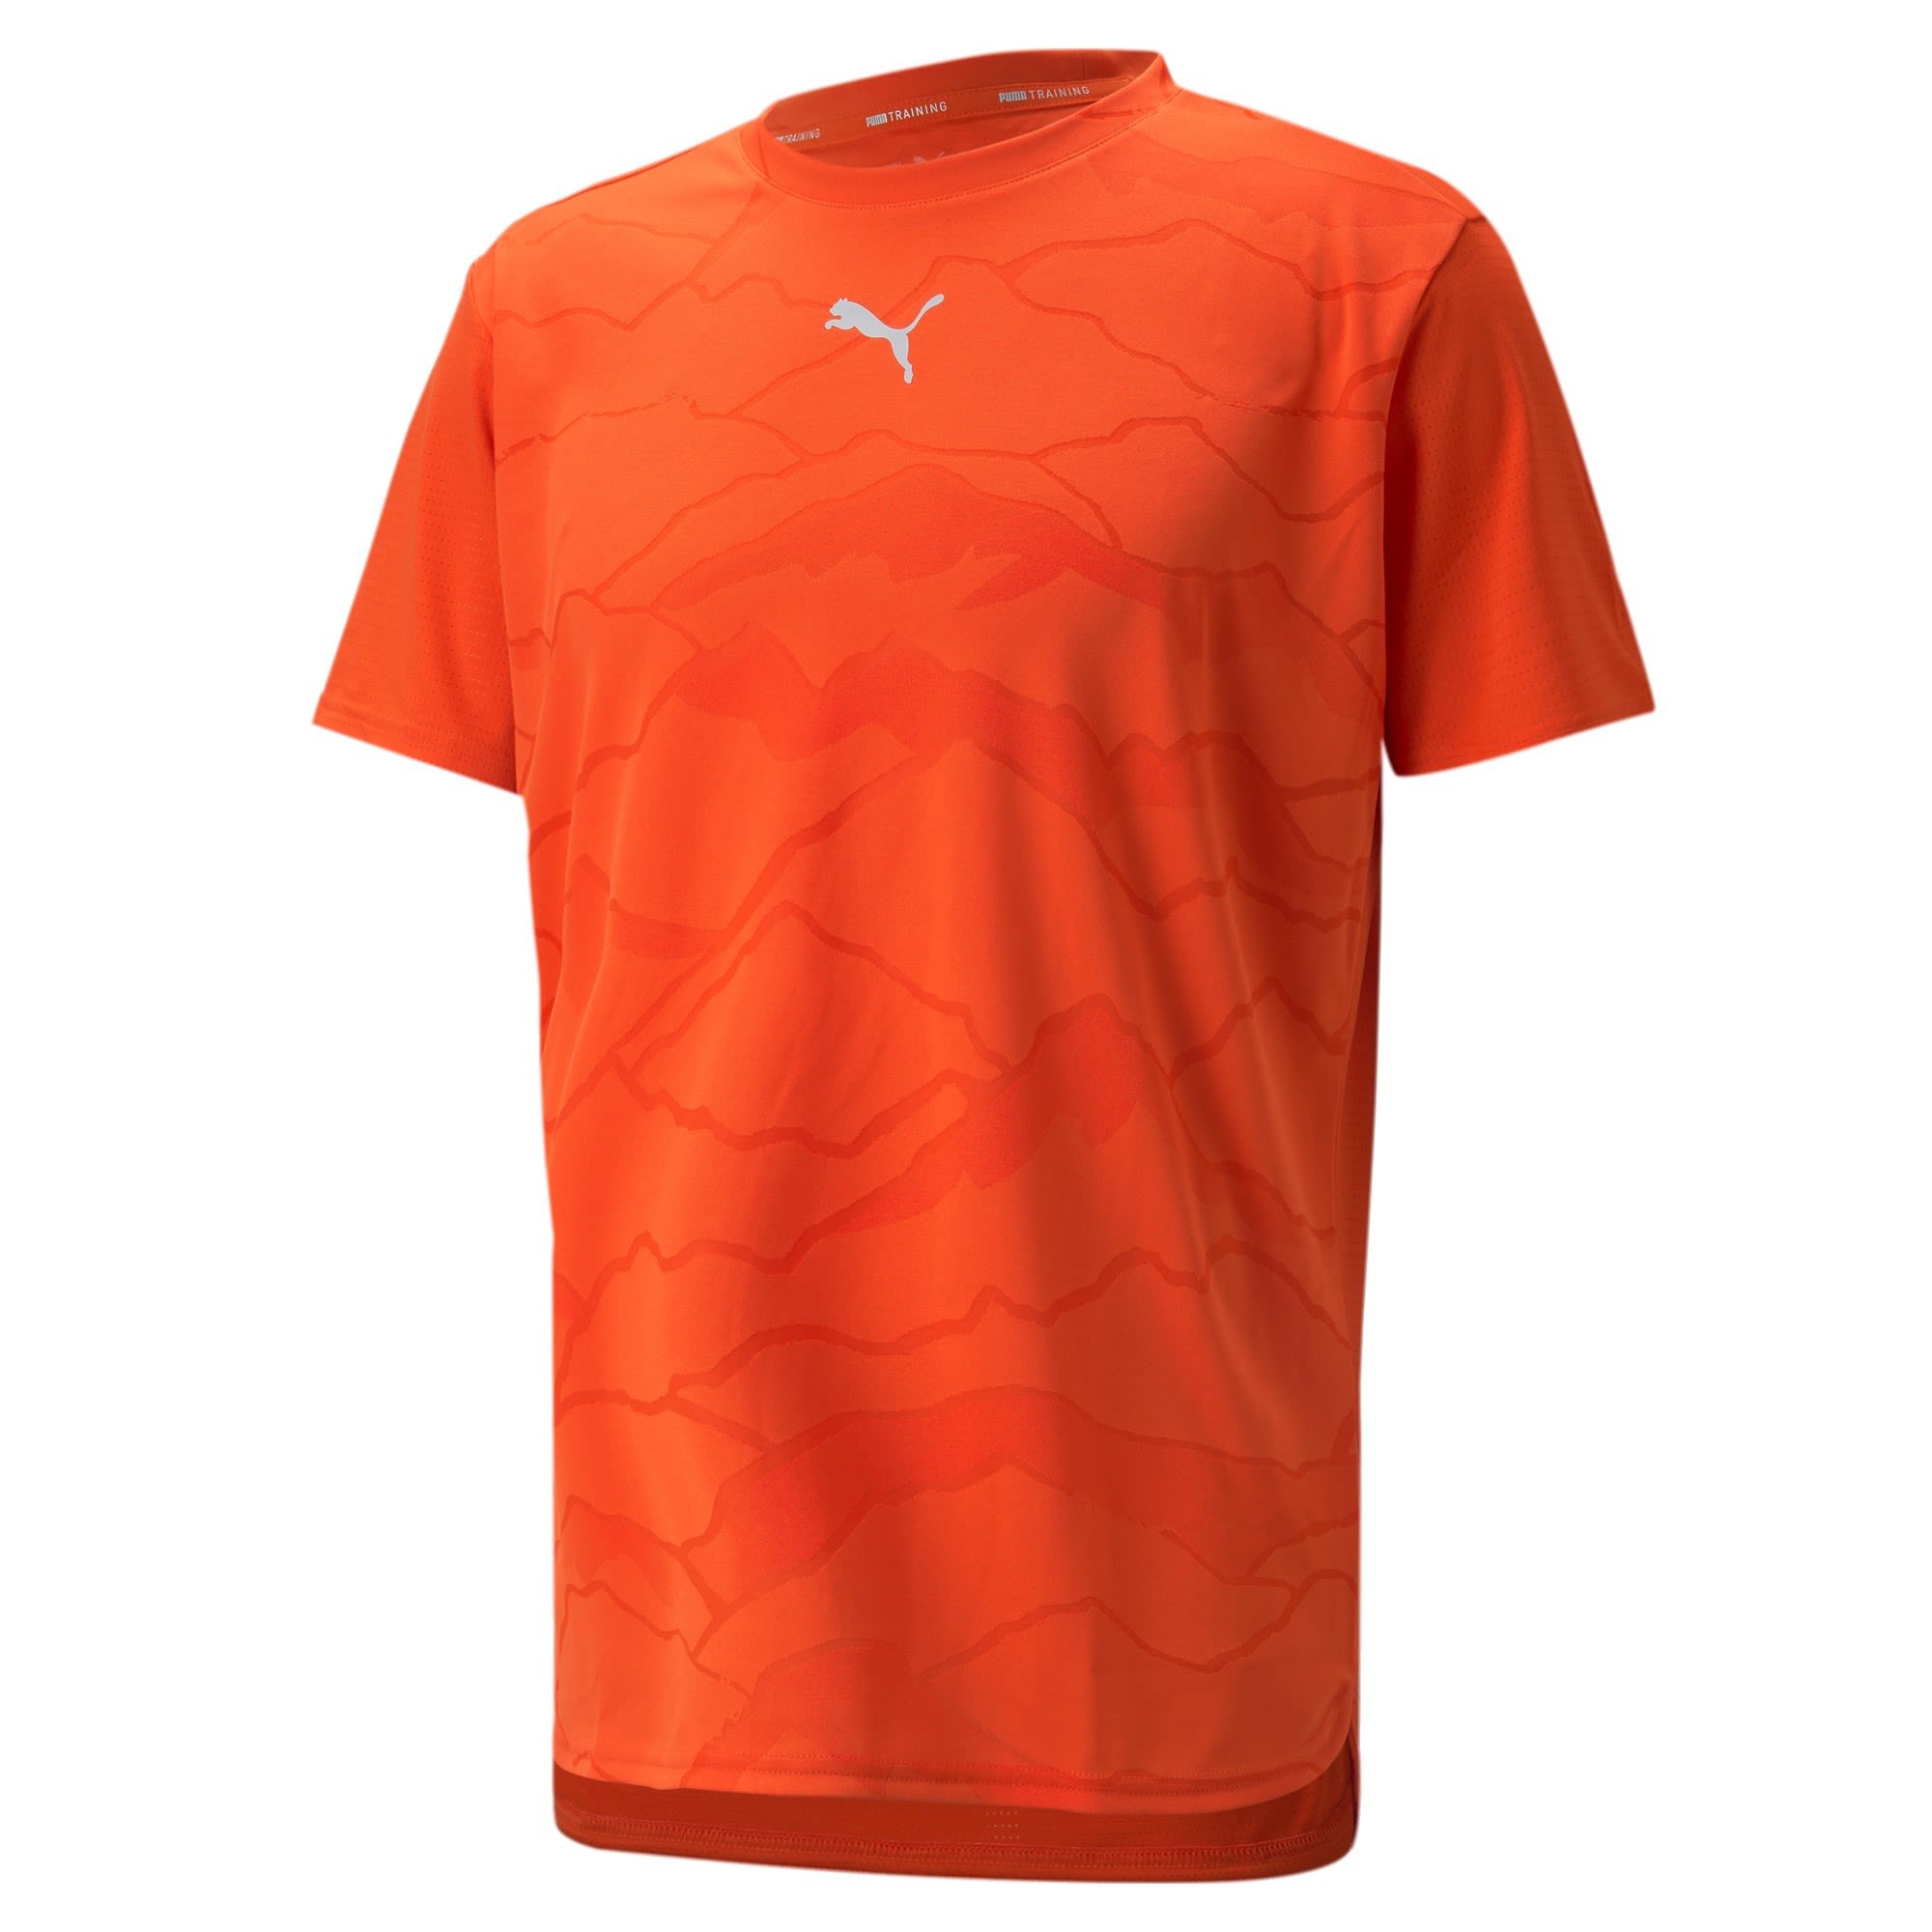 Puma Train Vent Tee Orange- Male Kurzarm-Shirts- Grsse XXL - Farbe Cherry Tomato - Jacquard